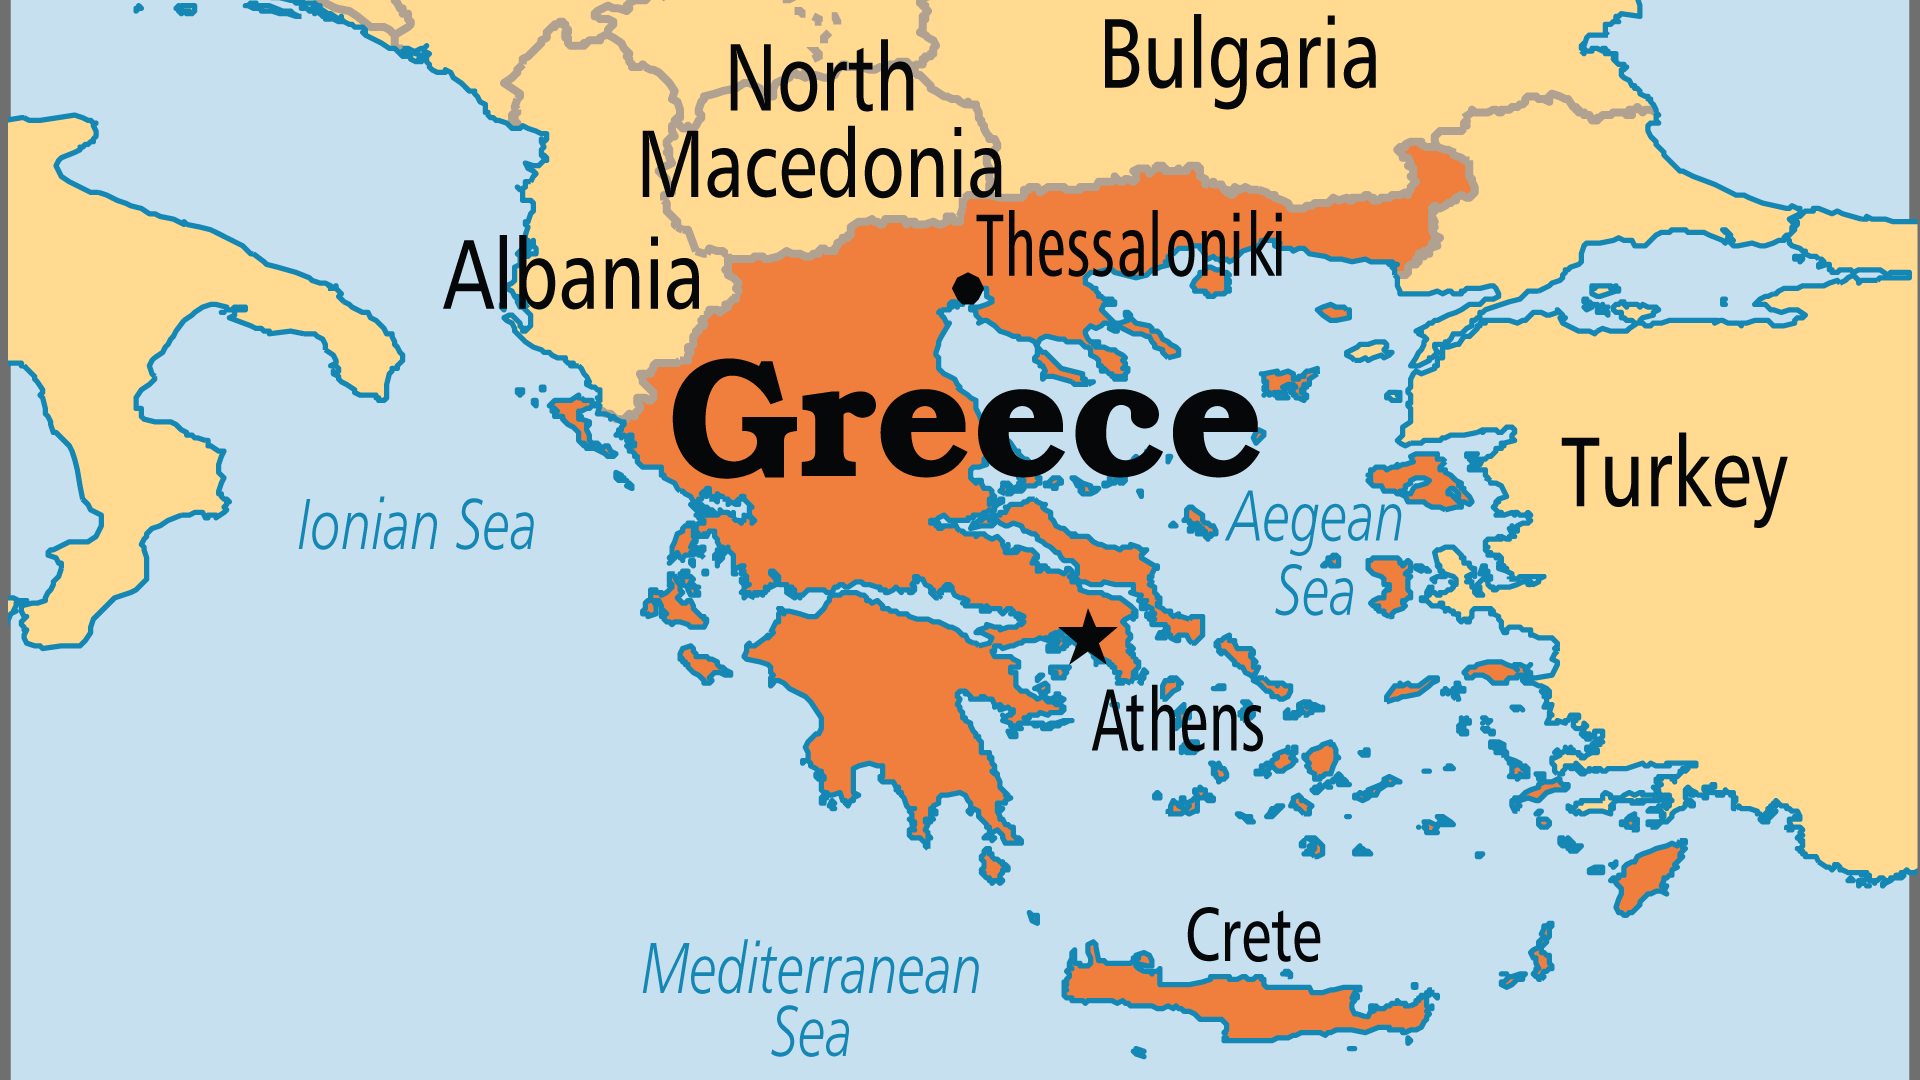 Greece (Operation World)